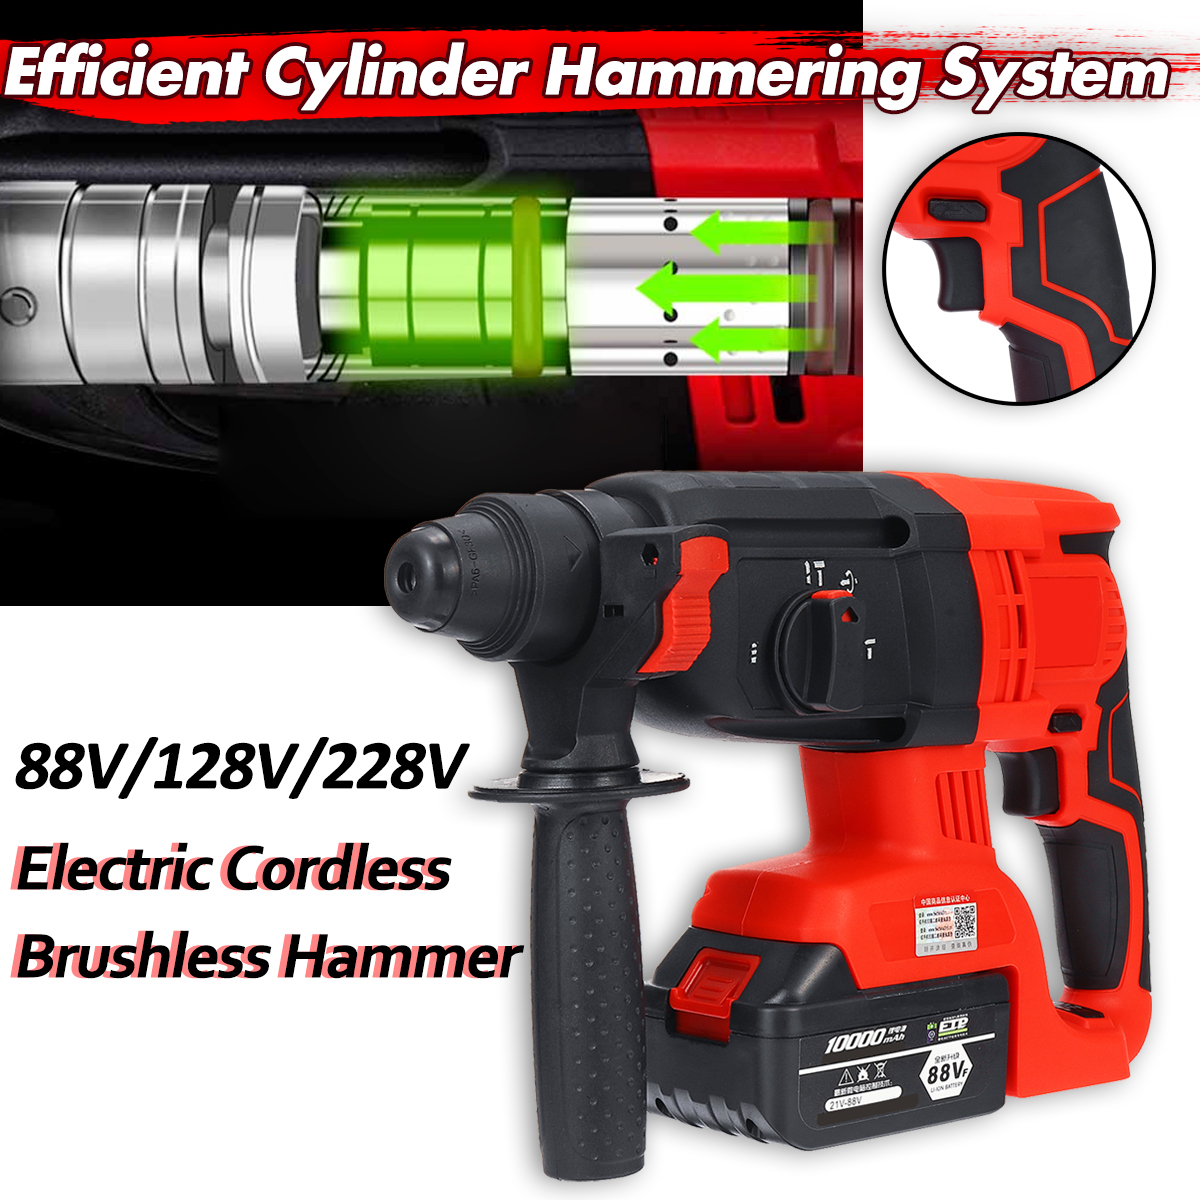 110-240V-3-In-1-Cordless-Electric-Brushless-Hammer-Drills-Breaker-Power-Drills-Electric-Hammer-Tool-1449219-3